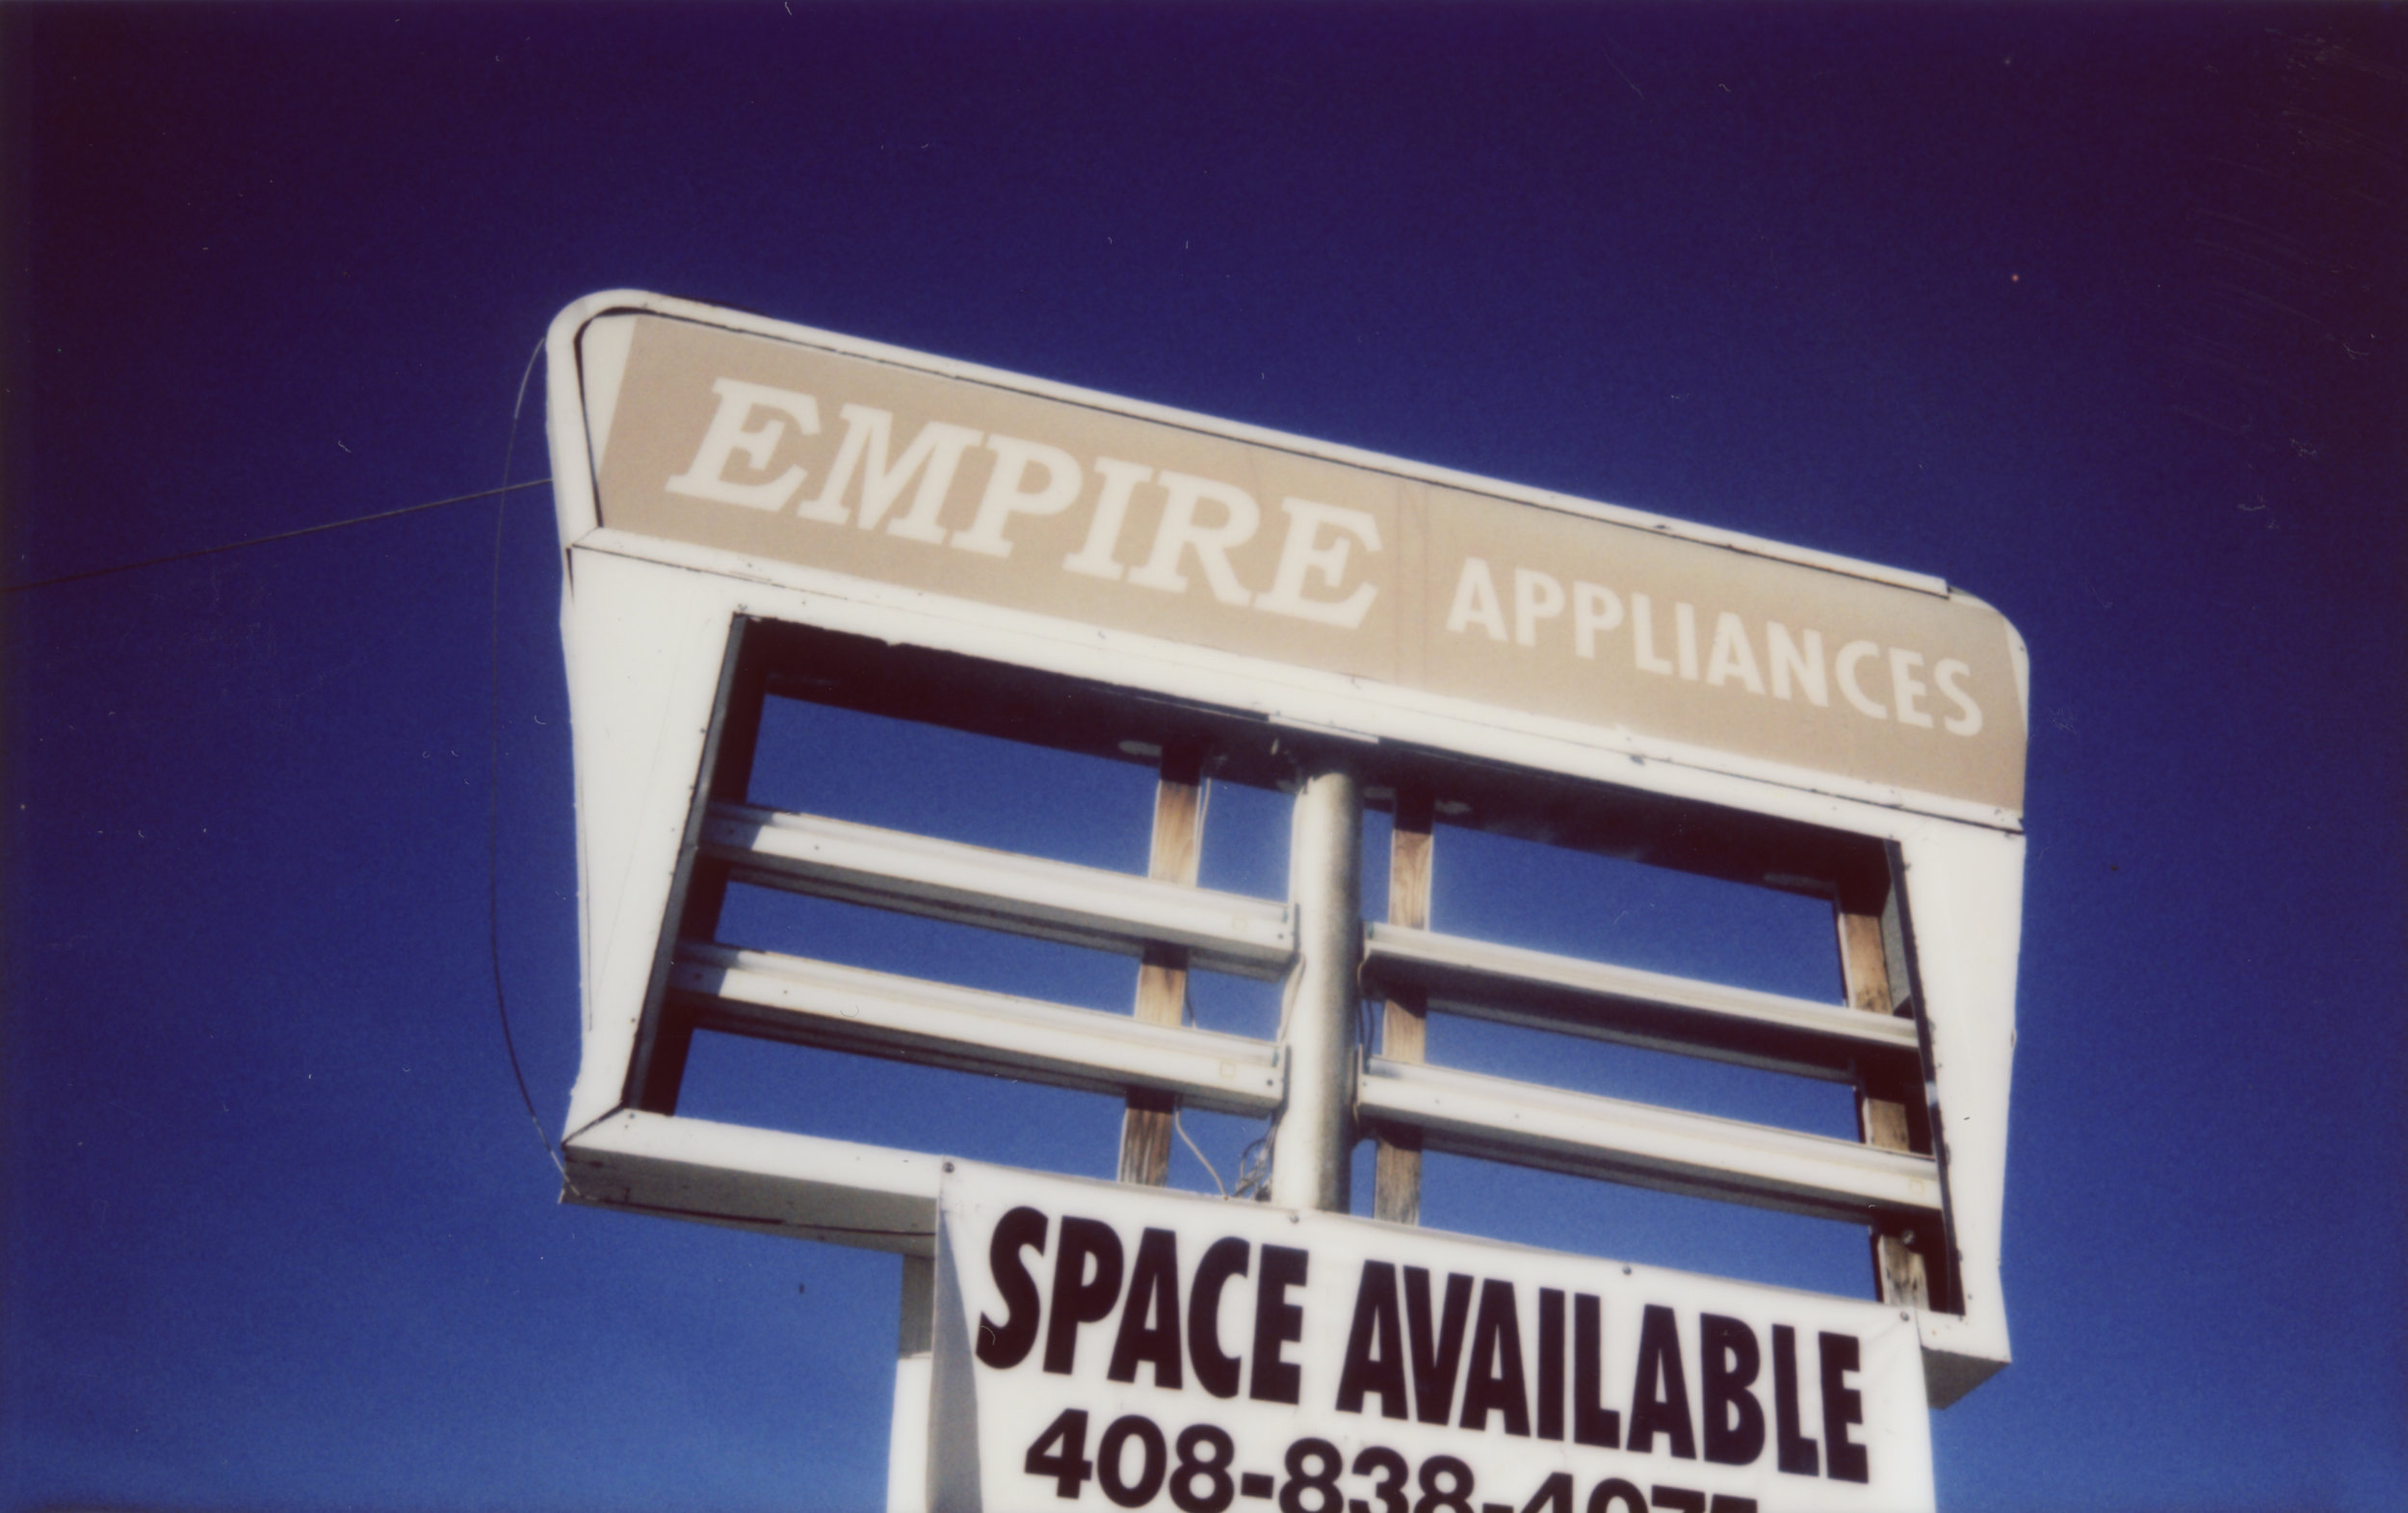  Fallen Empires. Instant Film. San Jose, CA 